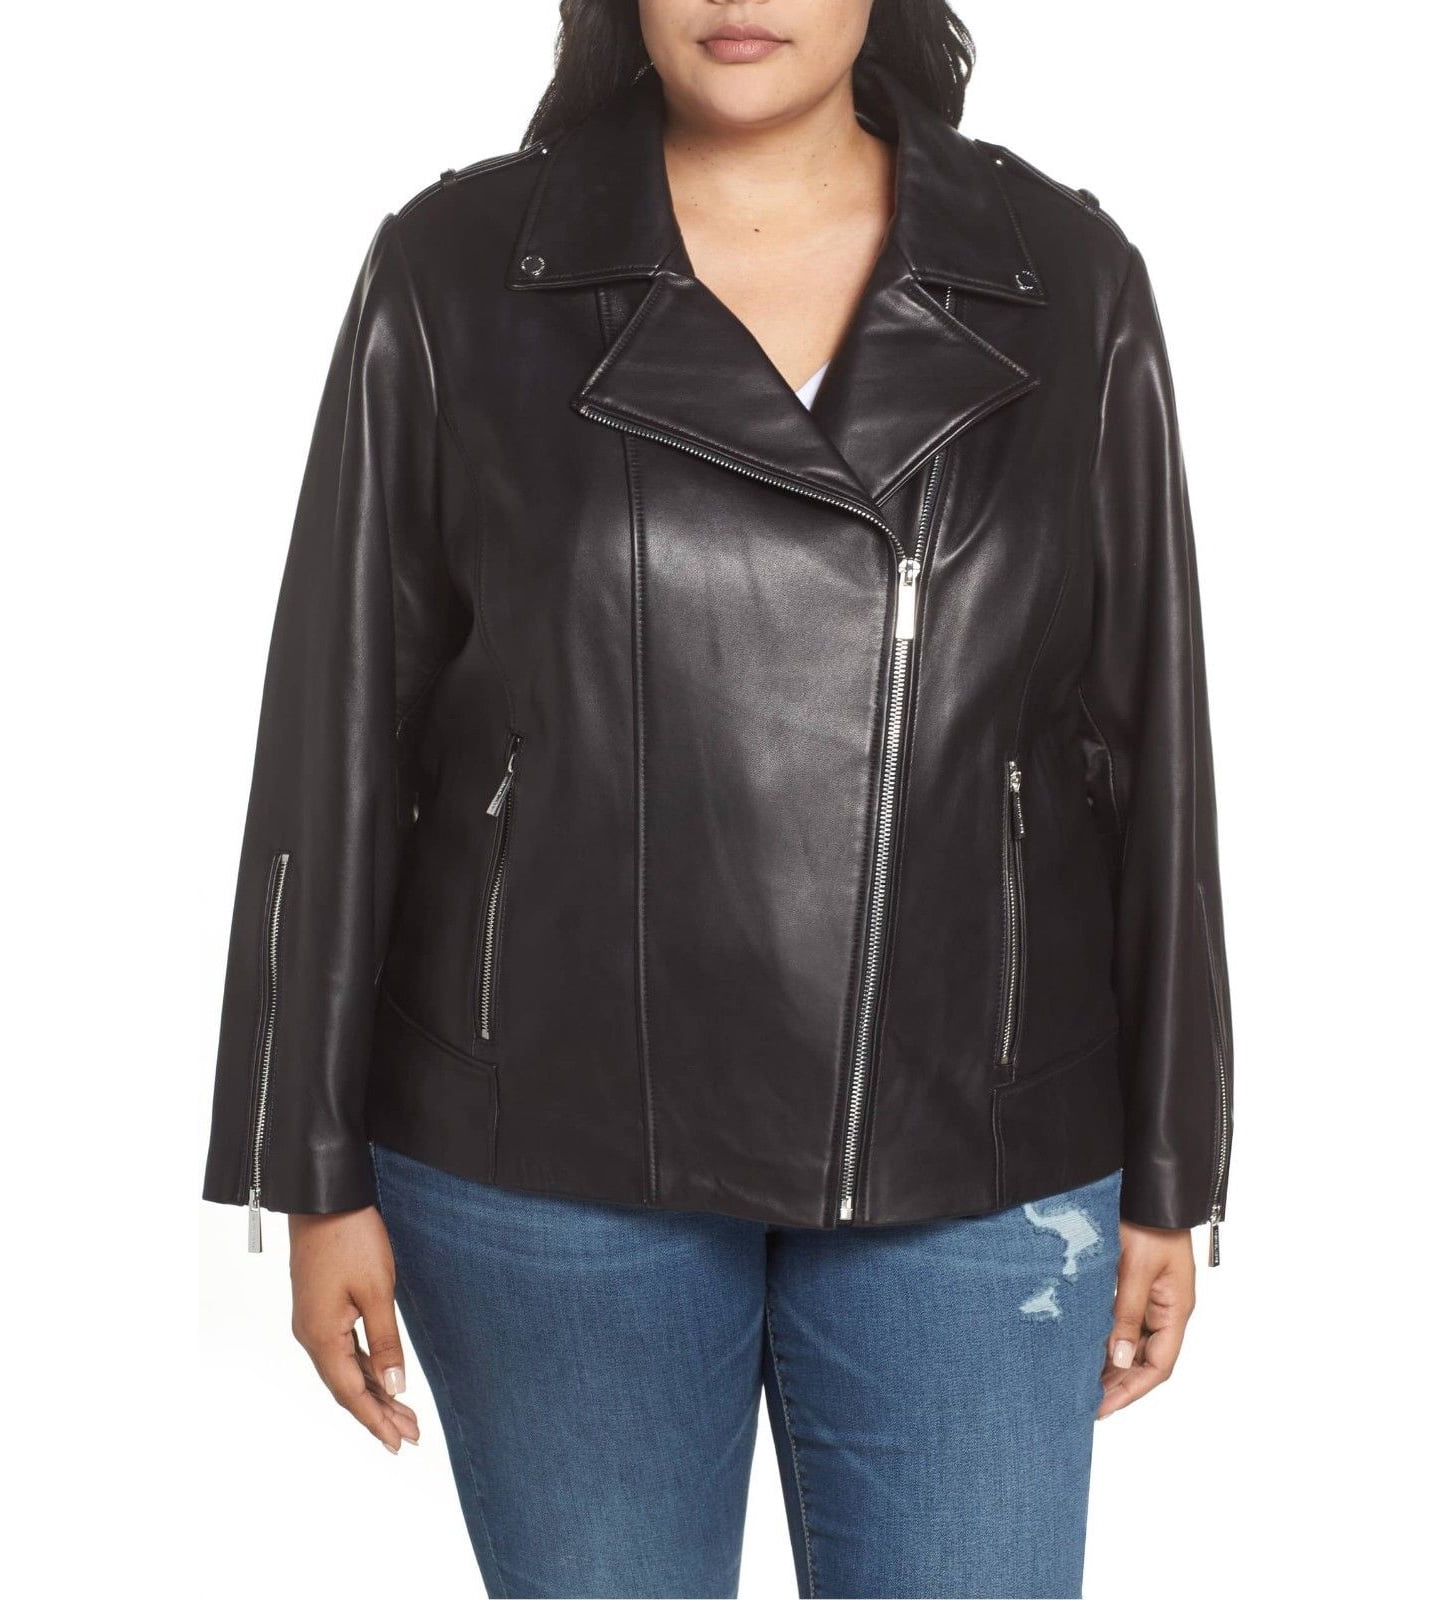 Michael Kors - Michael Kors Women's Plus Size Moto Leather Jacket ...